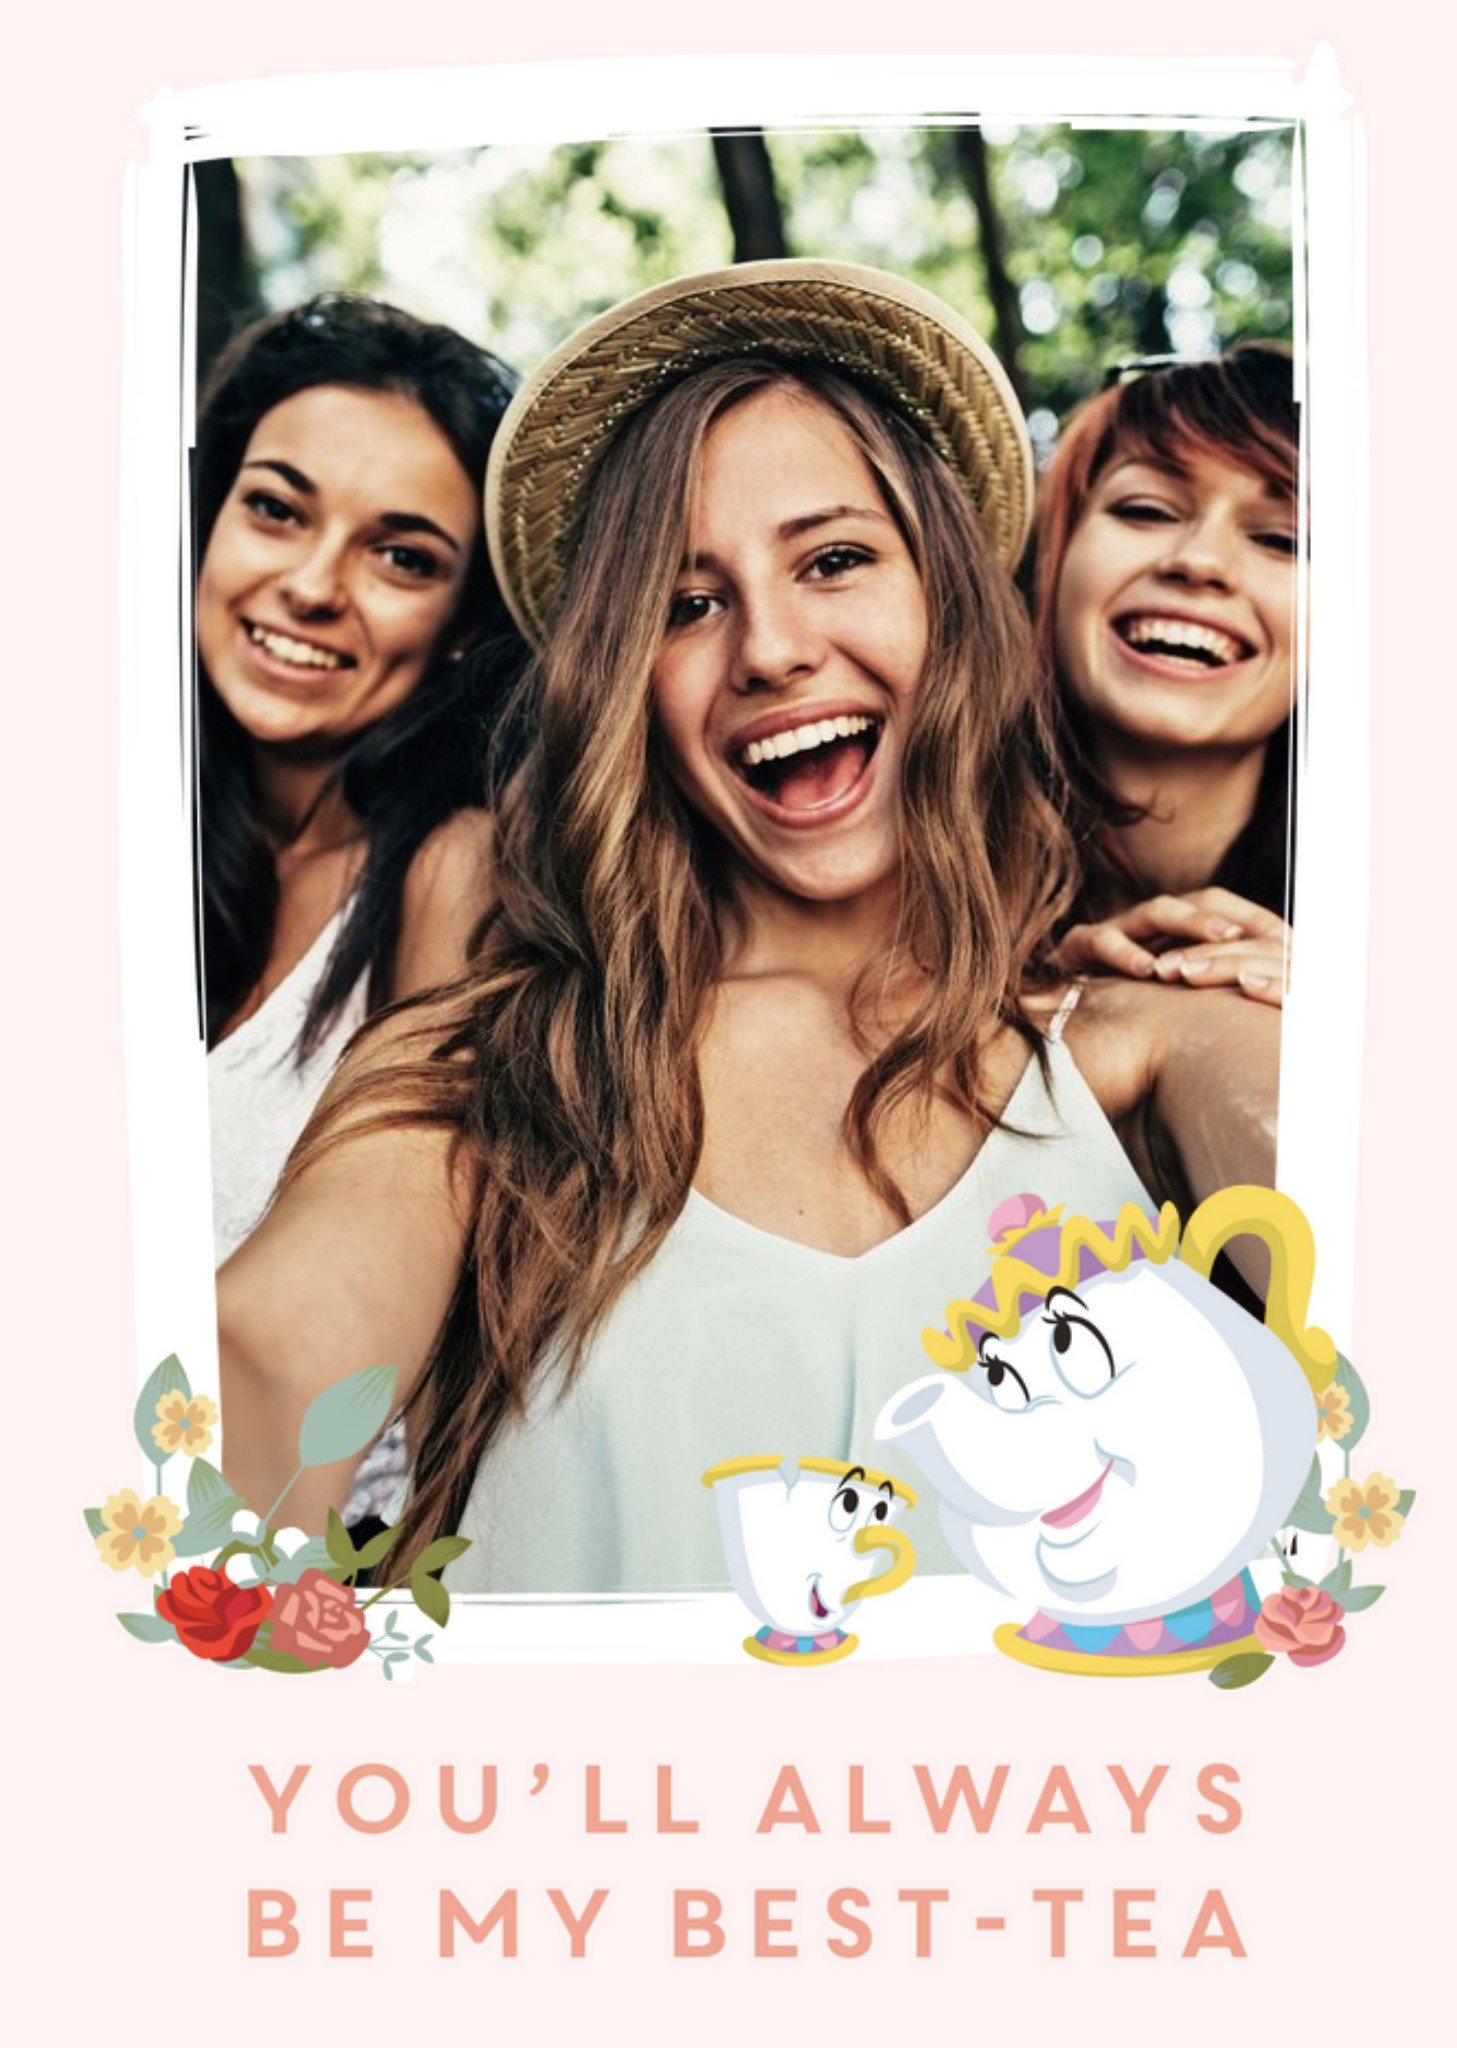 Other Birthday Card - Female Friend - Disney - Beauty And The Beast - Best Friend - Photo Upload, La